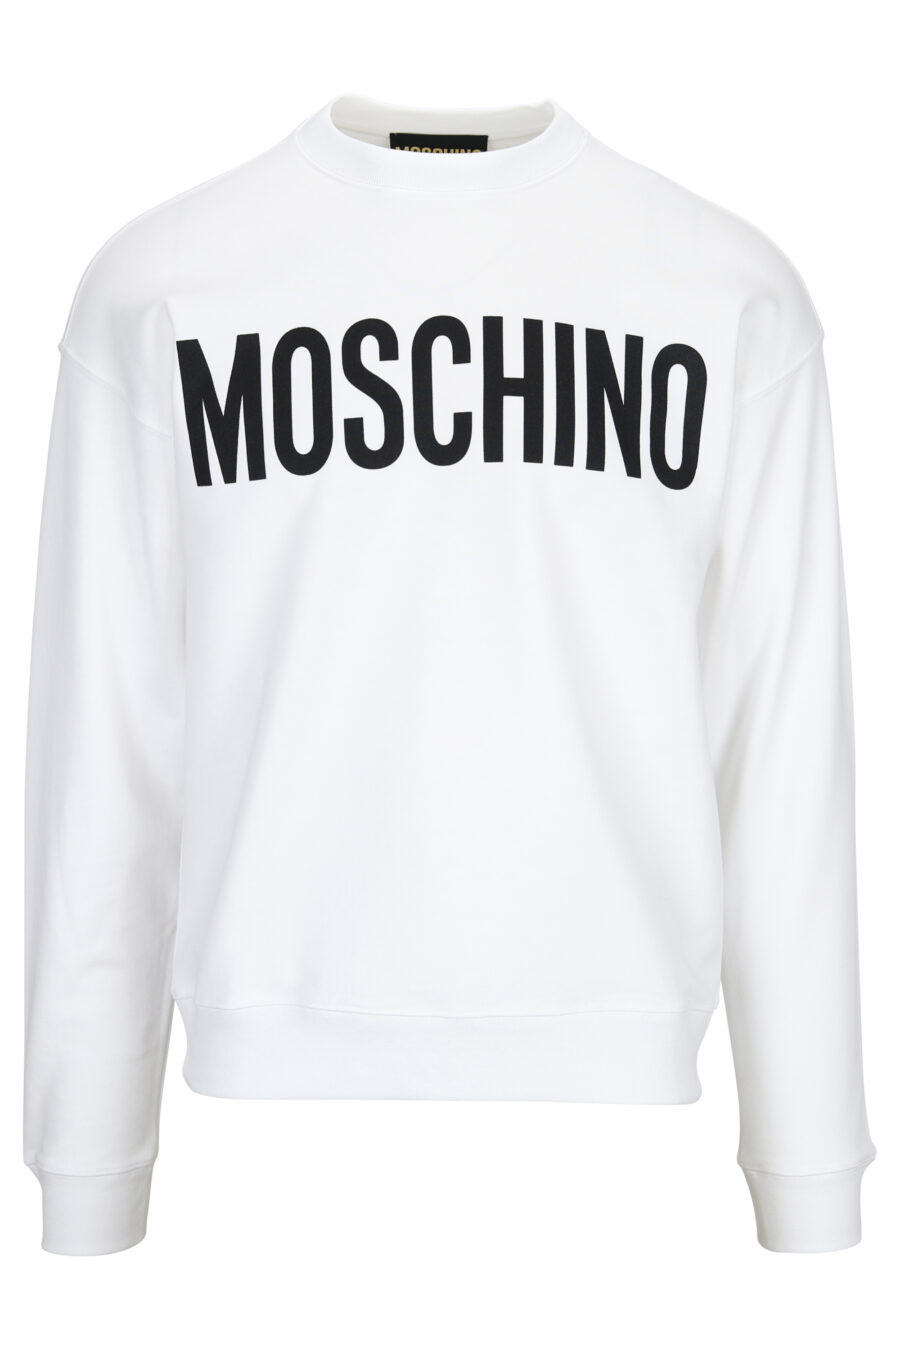 White sweatshirt with black maxilogue - 889316943894